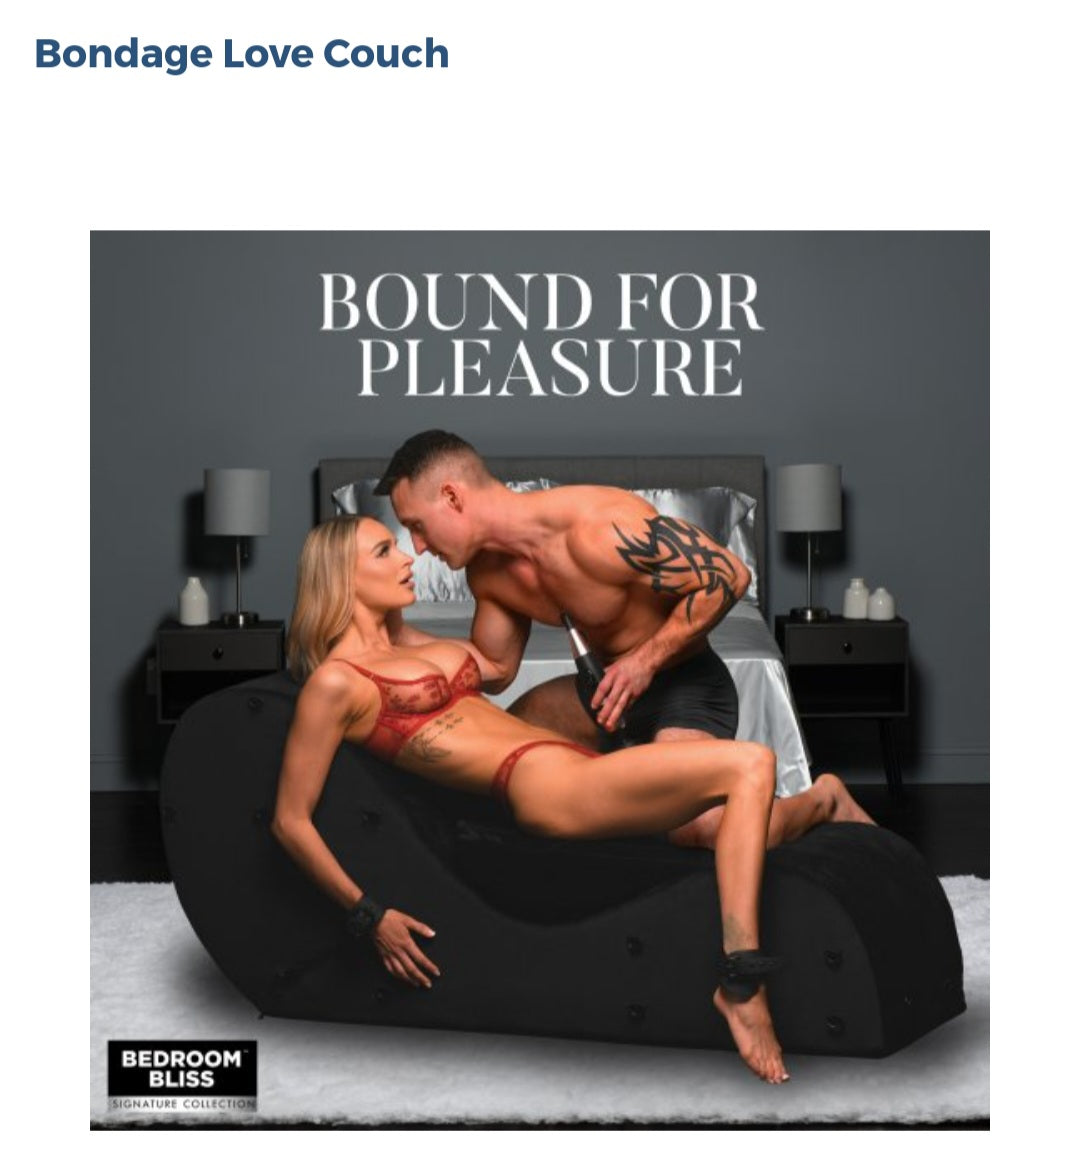 Bondage Love Couch